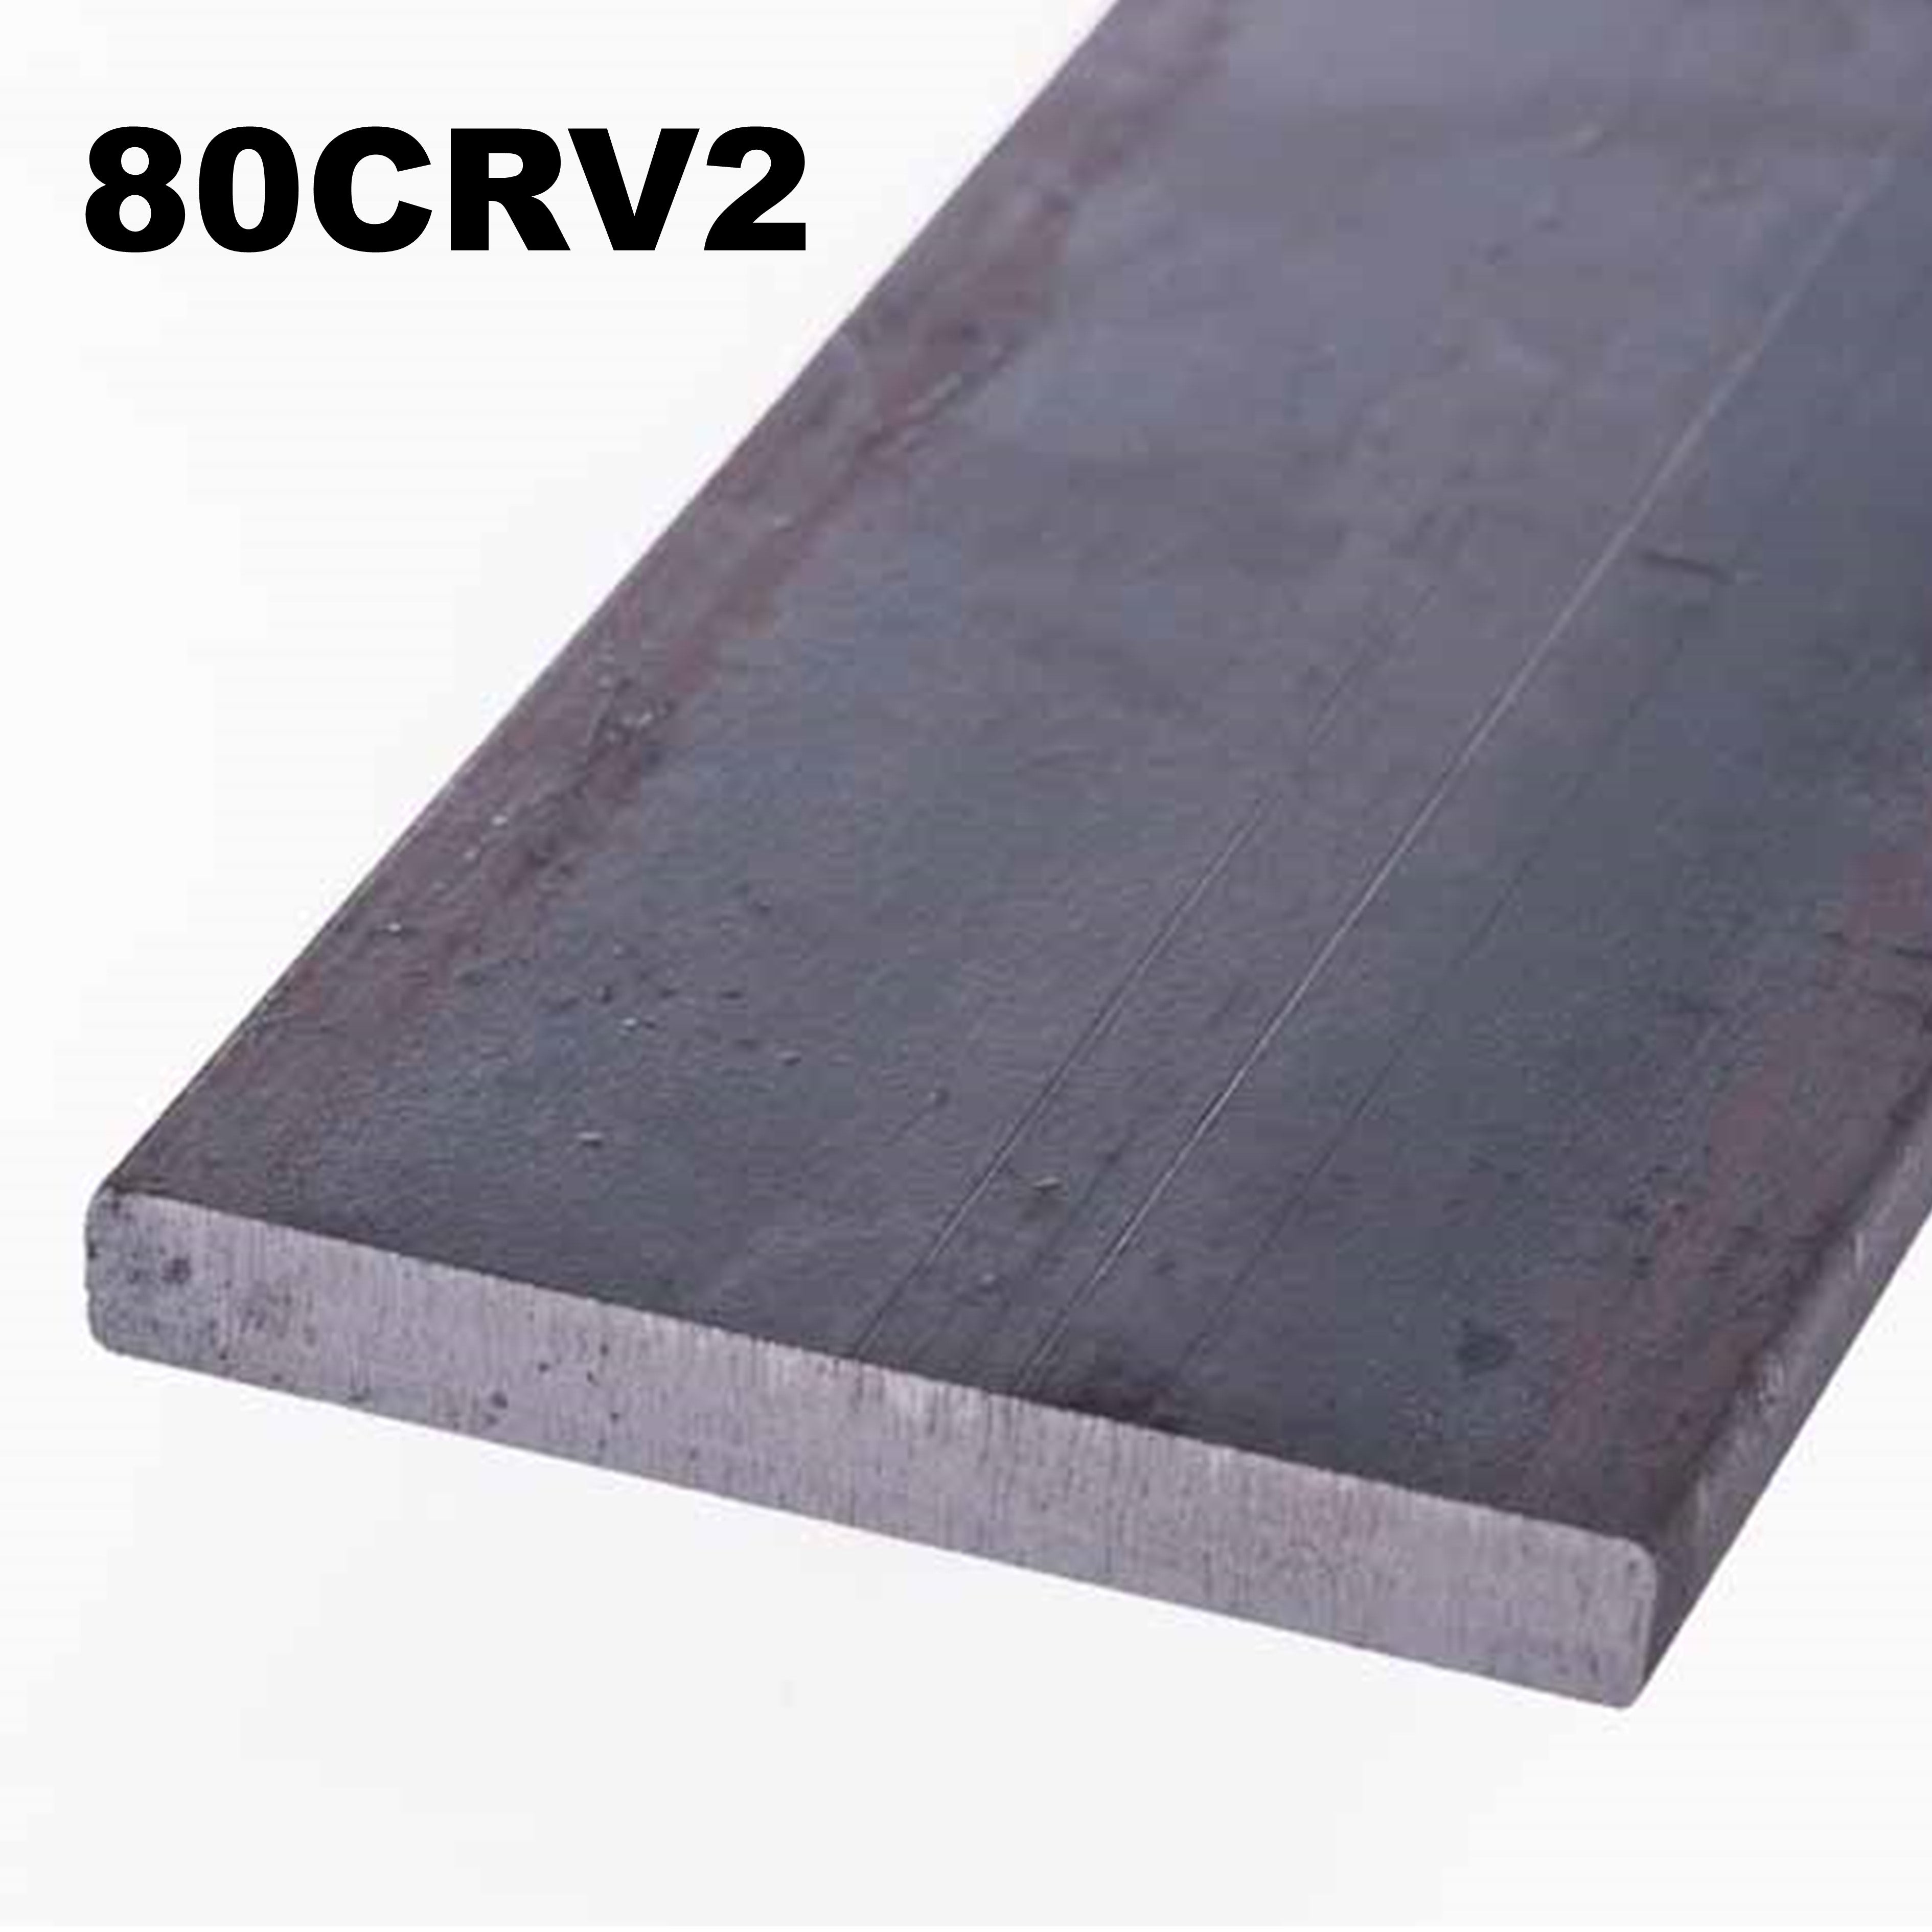 80CRV2 High Carbon Steel Bar